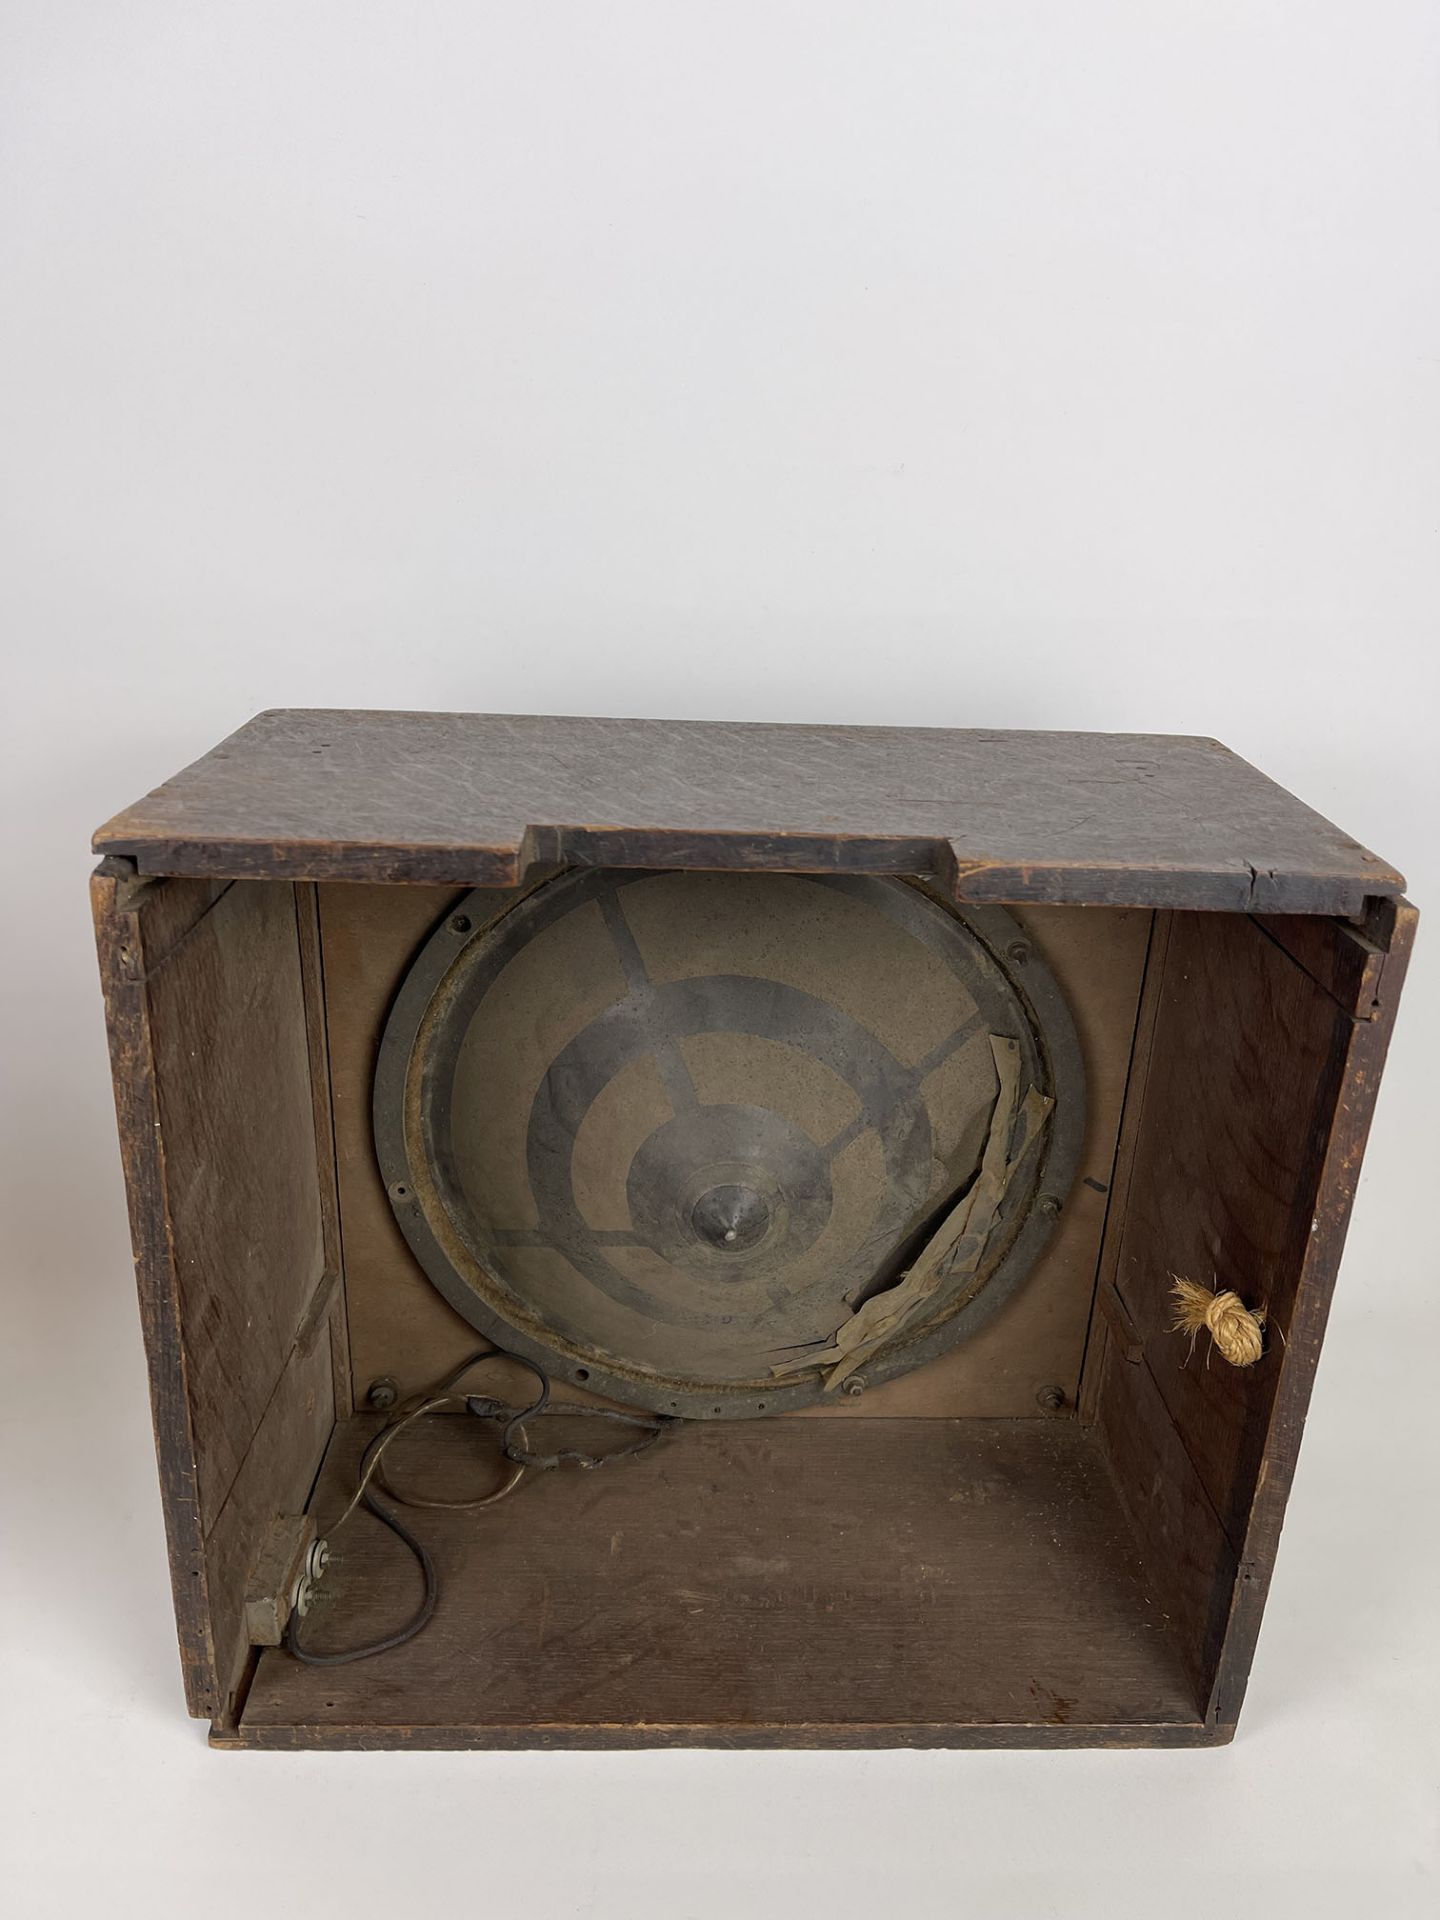 Lot of 5 Unrestored Vintage Radio Speakers - Image 3 of 9